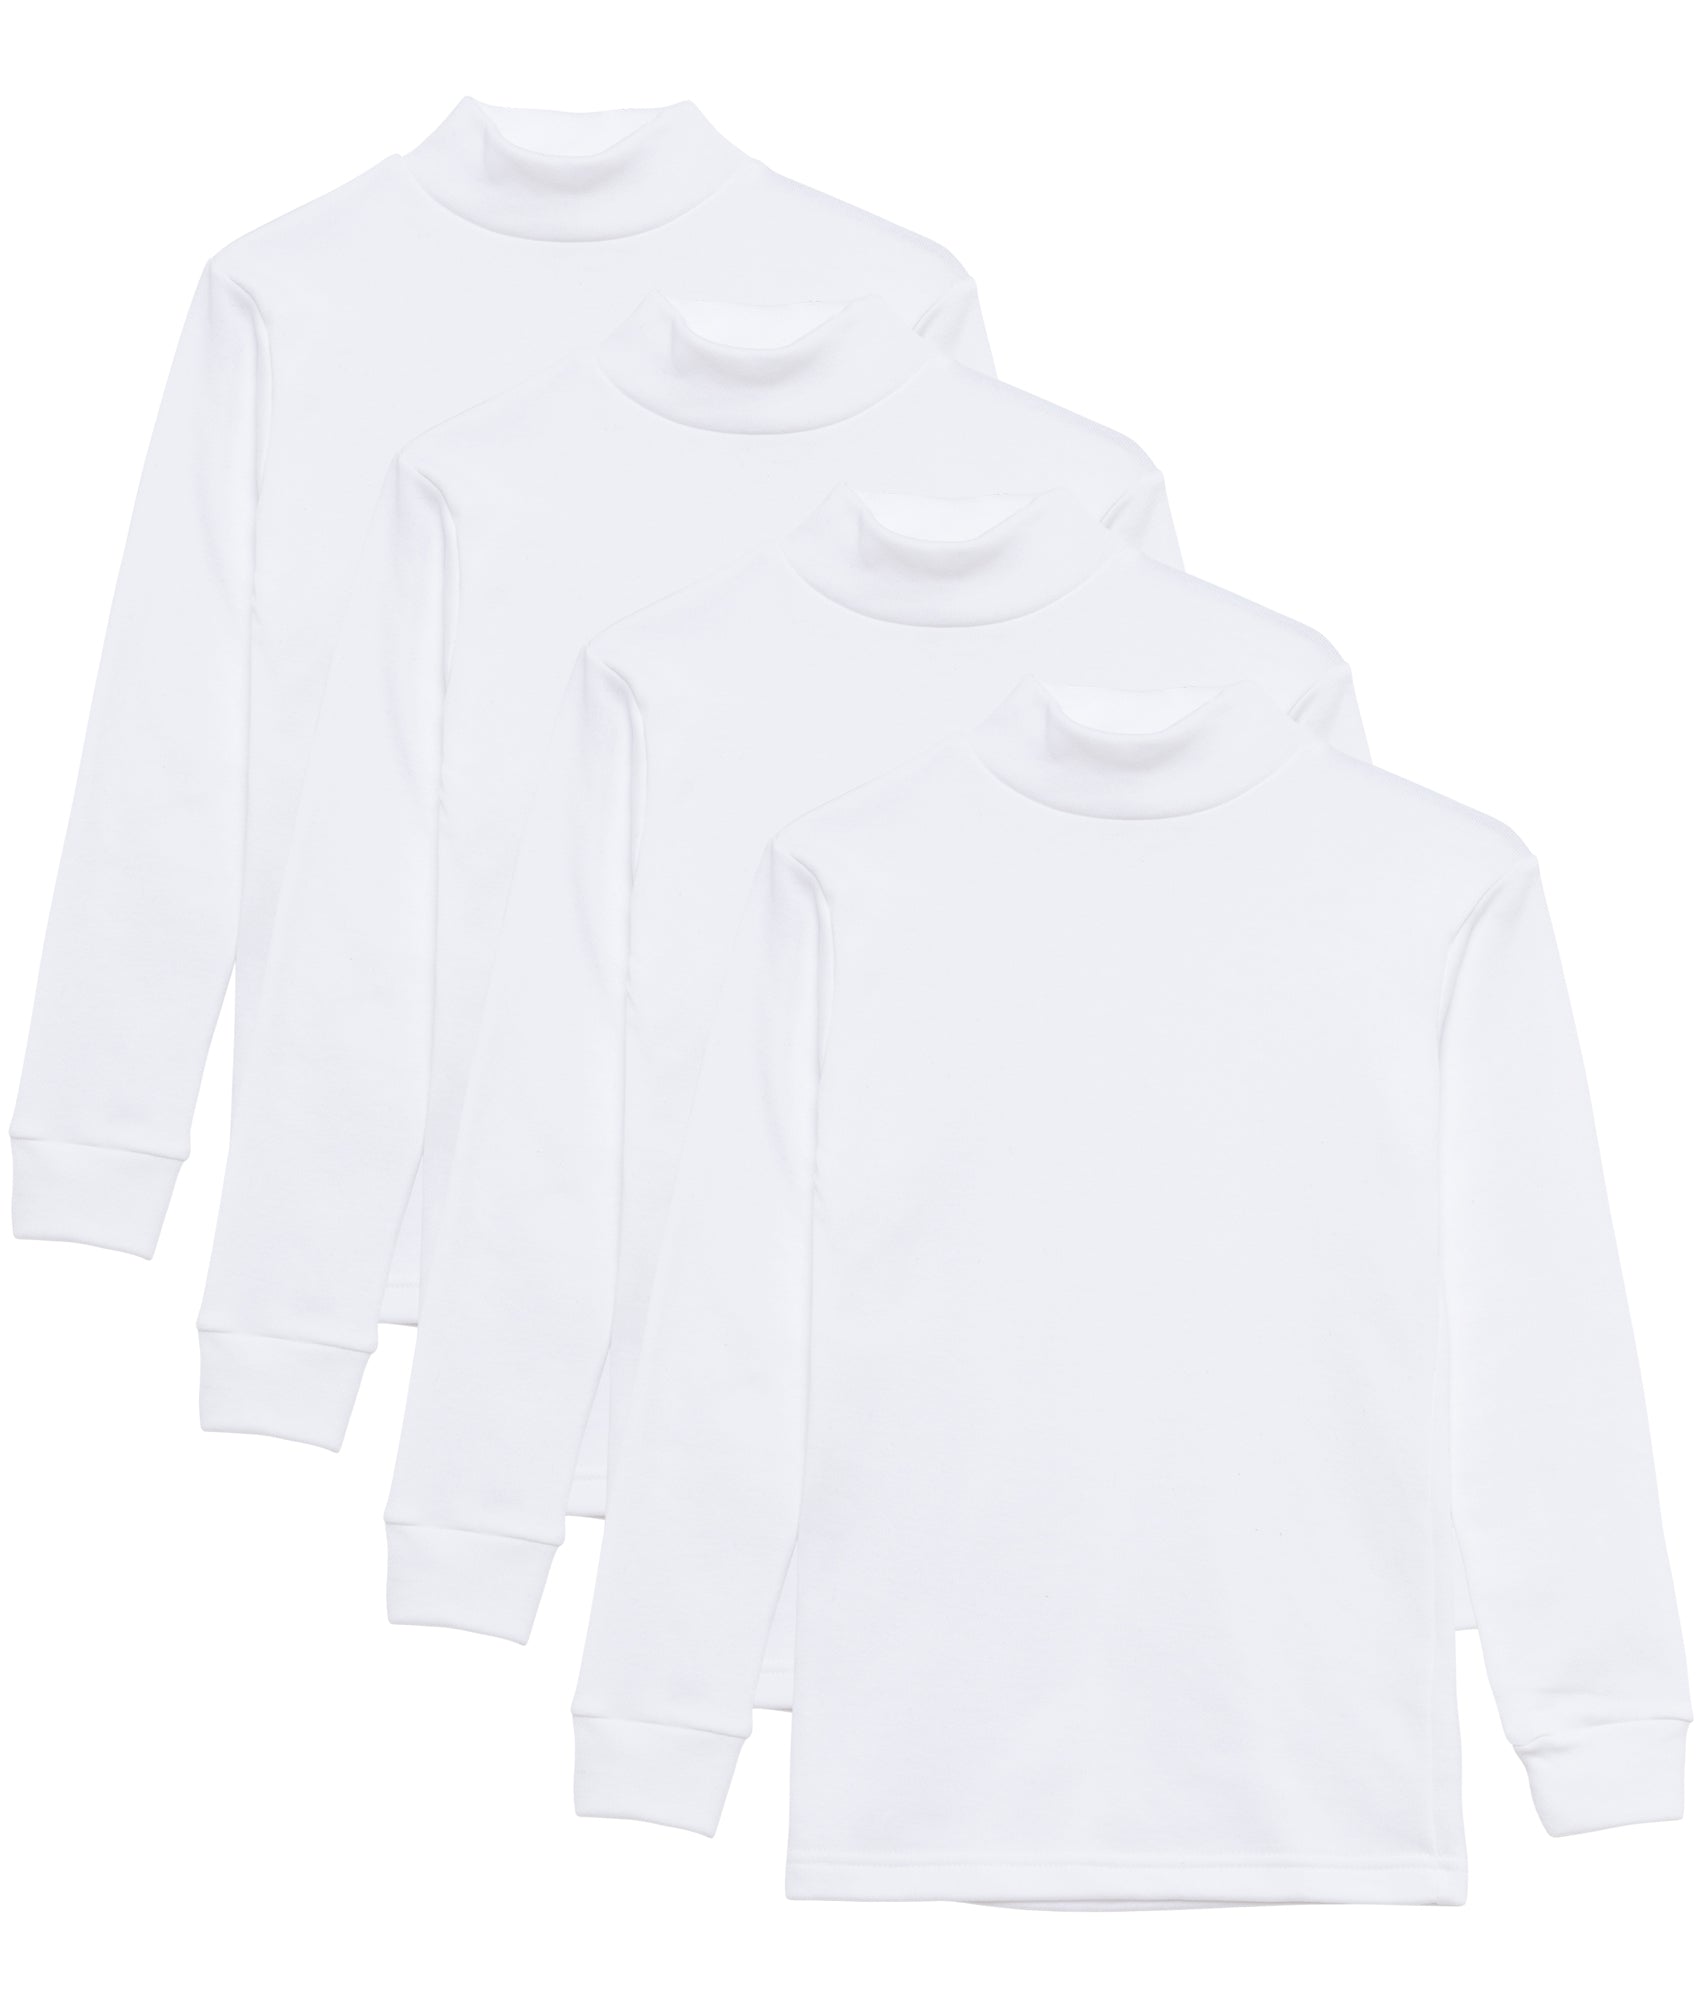 Camiseta térmica interior niño cuello medio alto semi cisne niño manga  larga colores lisos